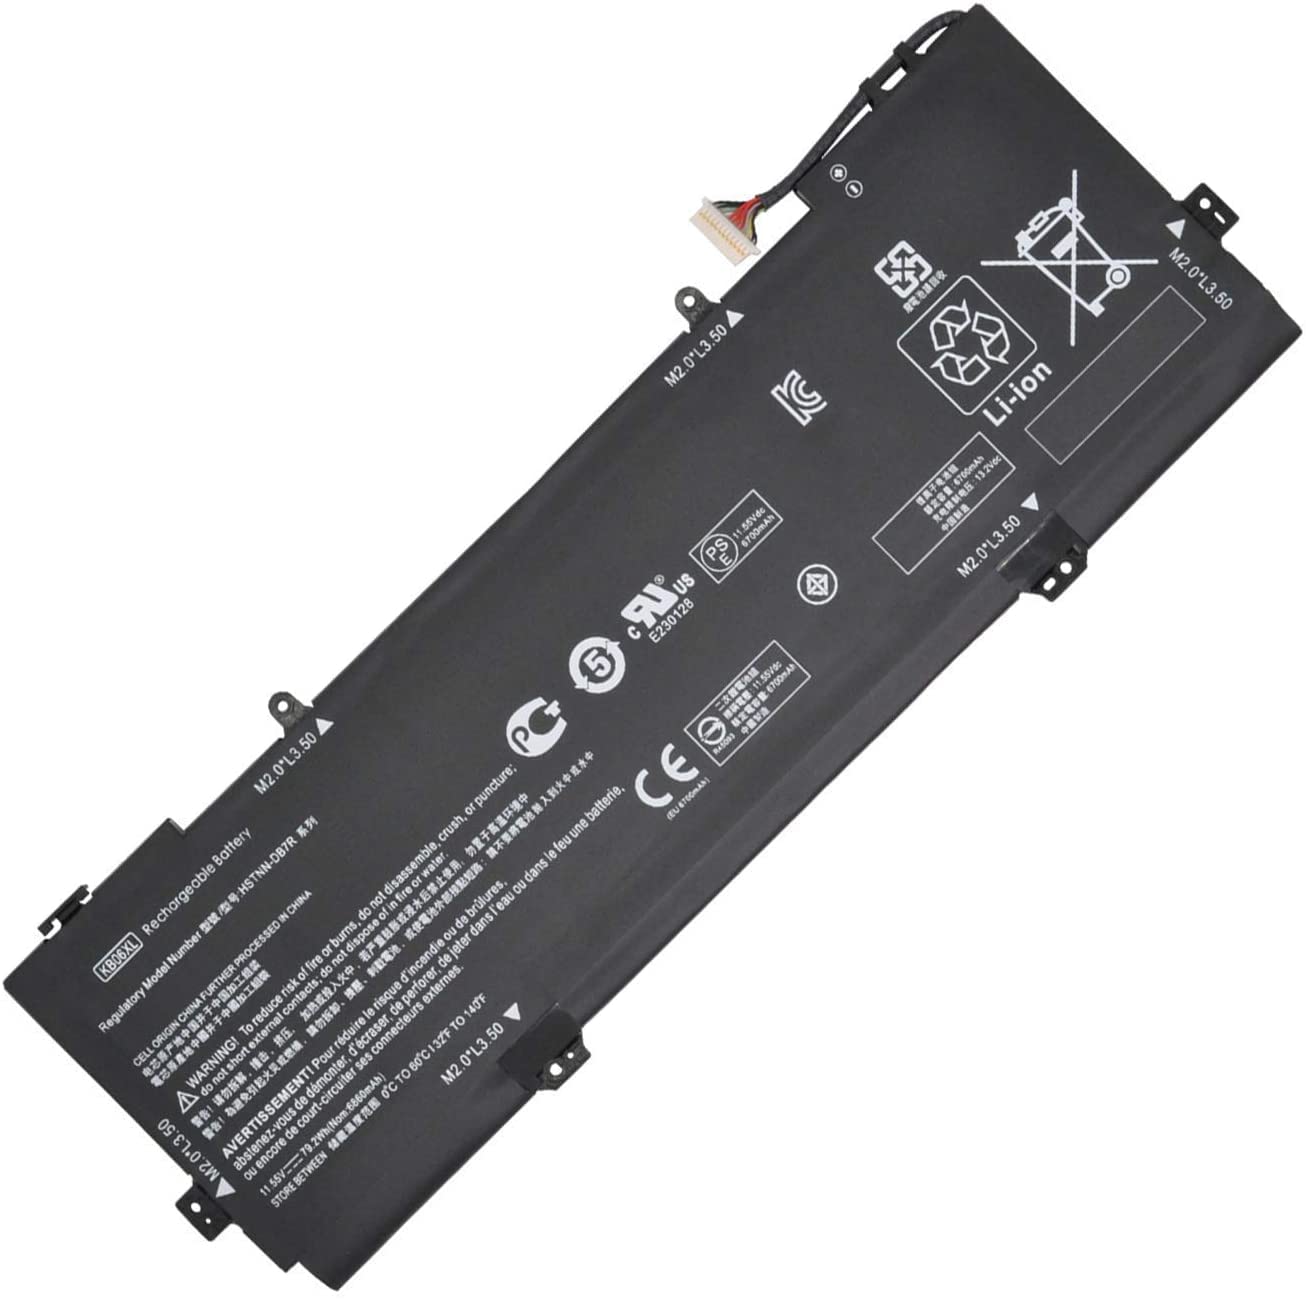 WISTAR KB06XL Battery for HP Spectre X360 15-bl000 15t-bl000:15-bl075nr 15-bl012dx 15-bl152nr 15t-bl100 2PG91EA Z6L02EA Z6L01EA Z6L00EA Z6K99EA Z6K97EA Z6K96EA 902401-2C1 902499-855 HSTNN-DB7R TPN-Q179